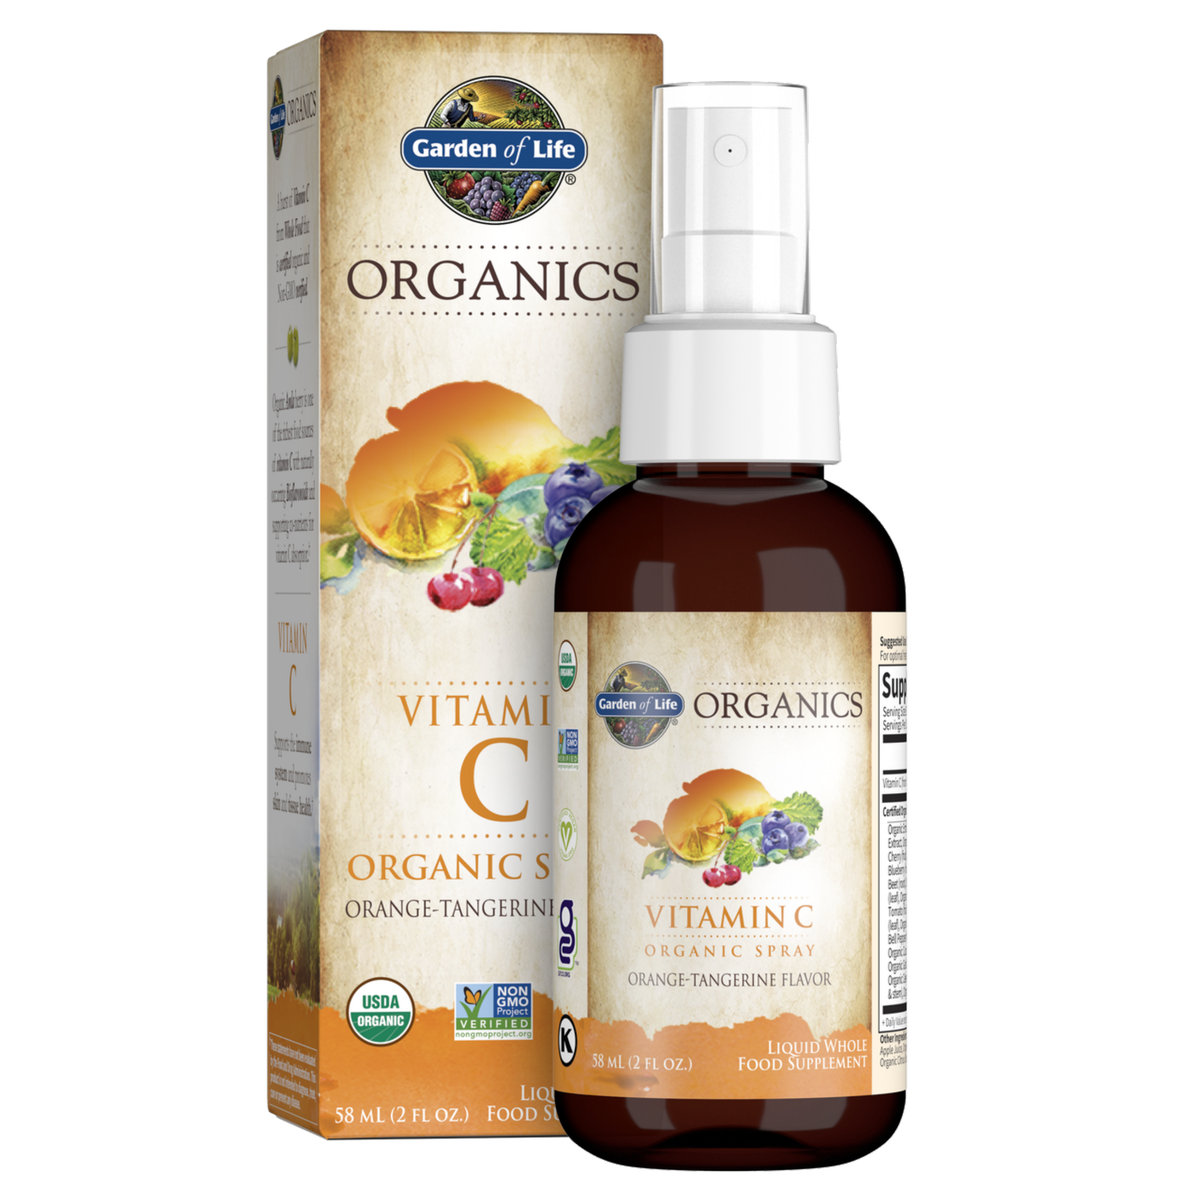 Organics Vitamin C Spray